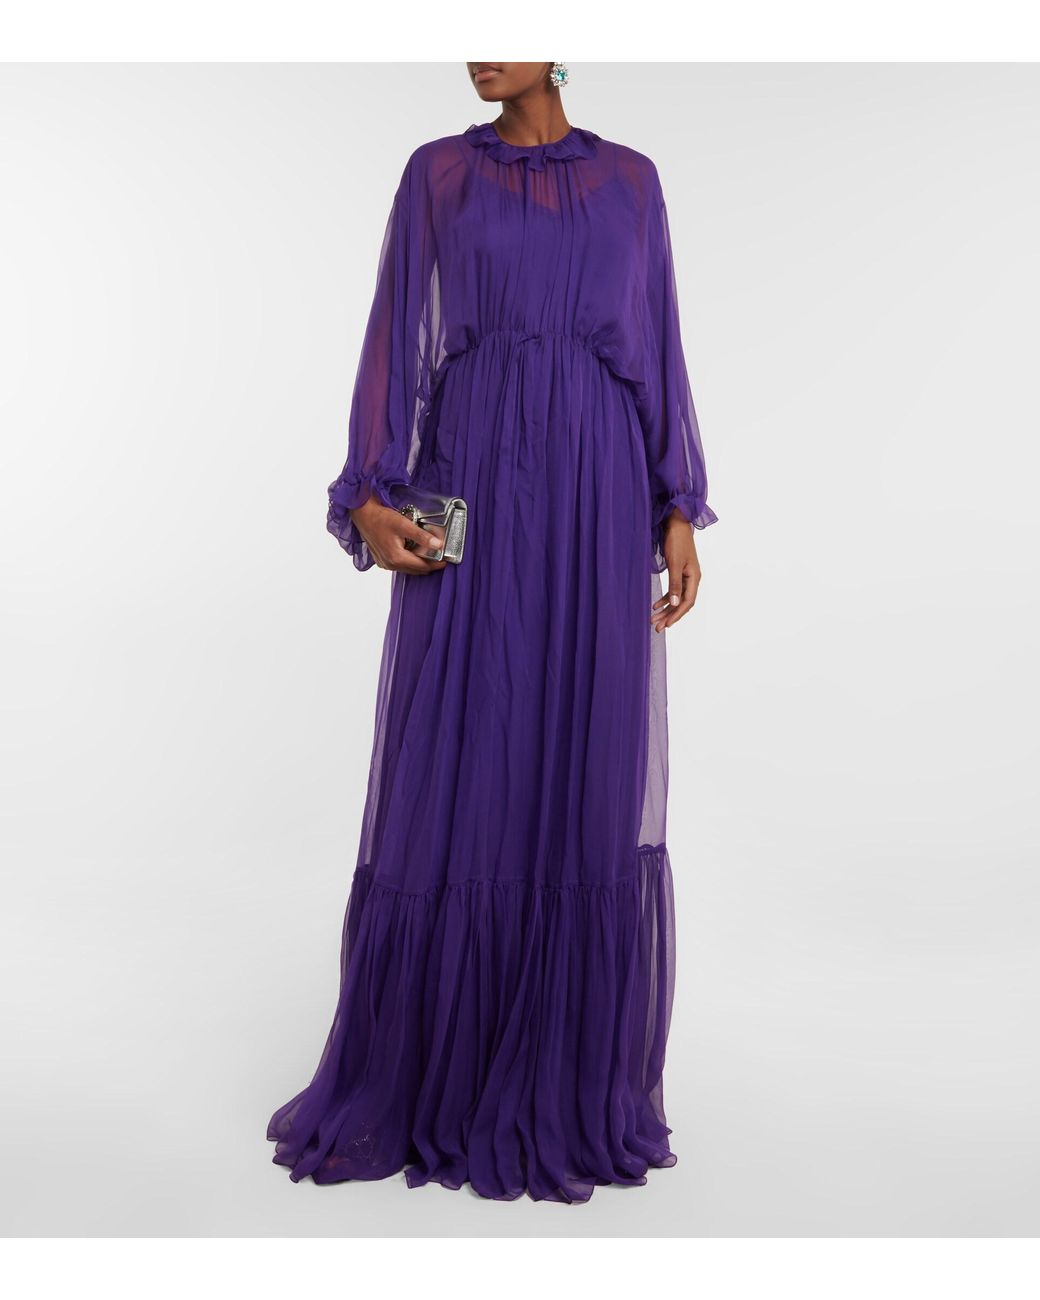 Gucci Silk Chiffon Gown in Purple | Lyst